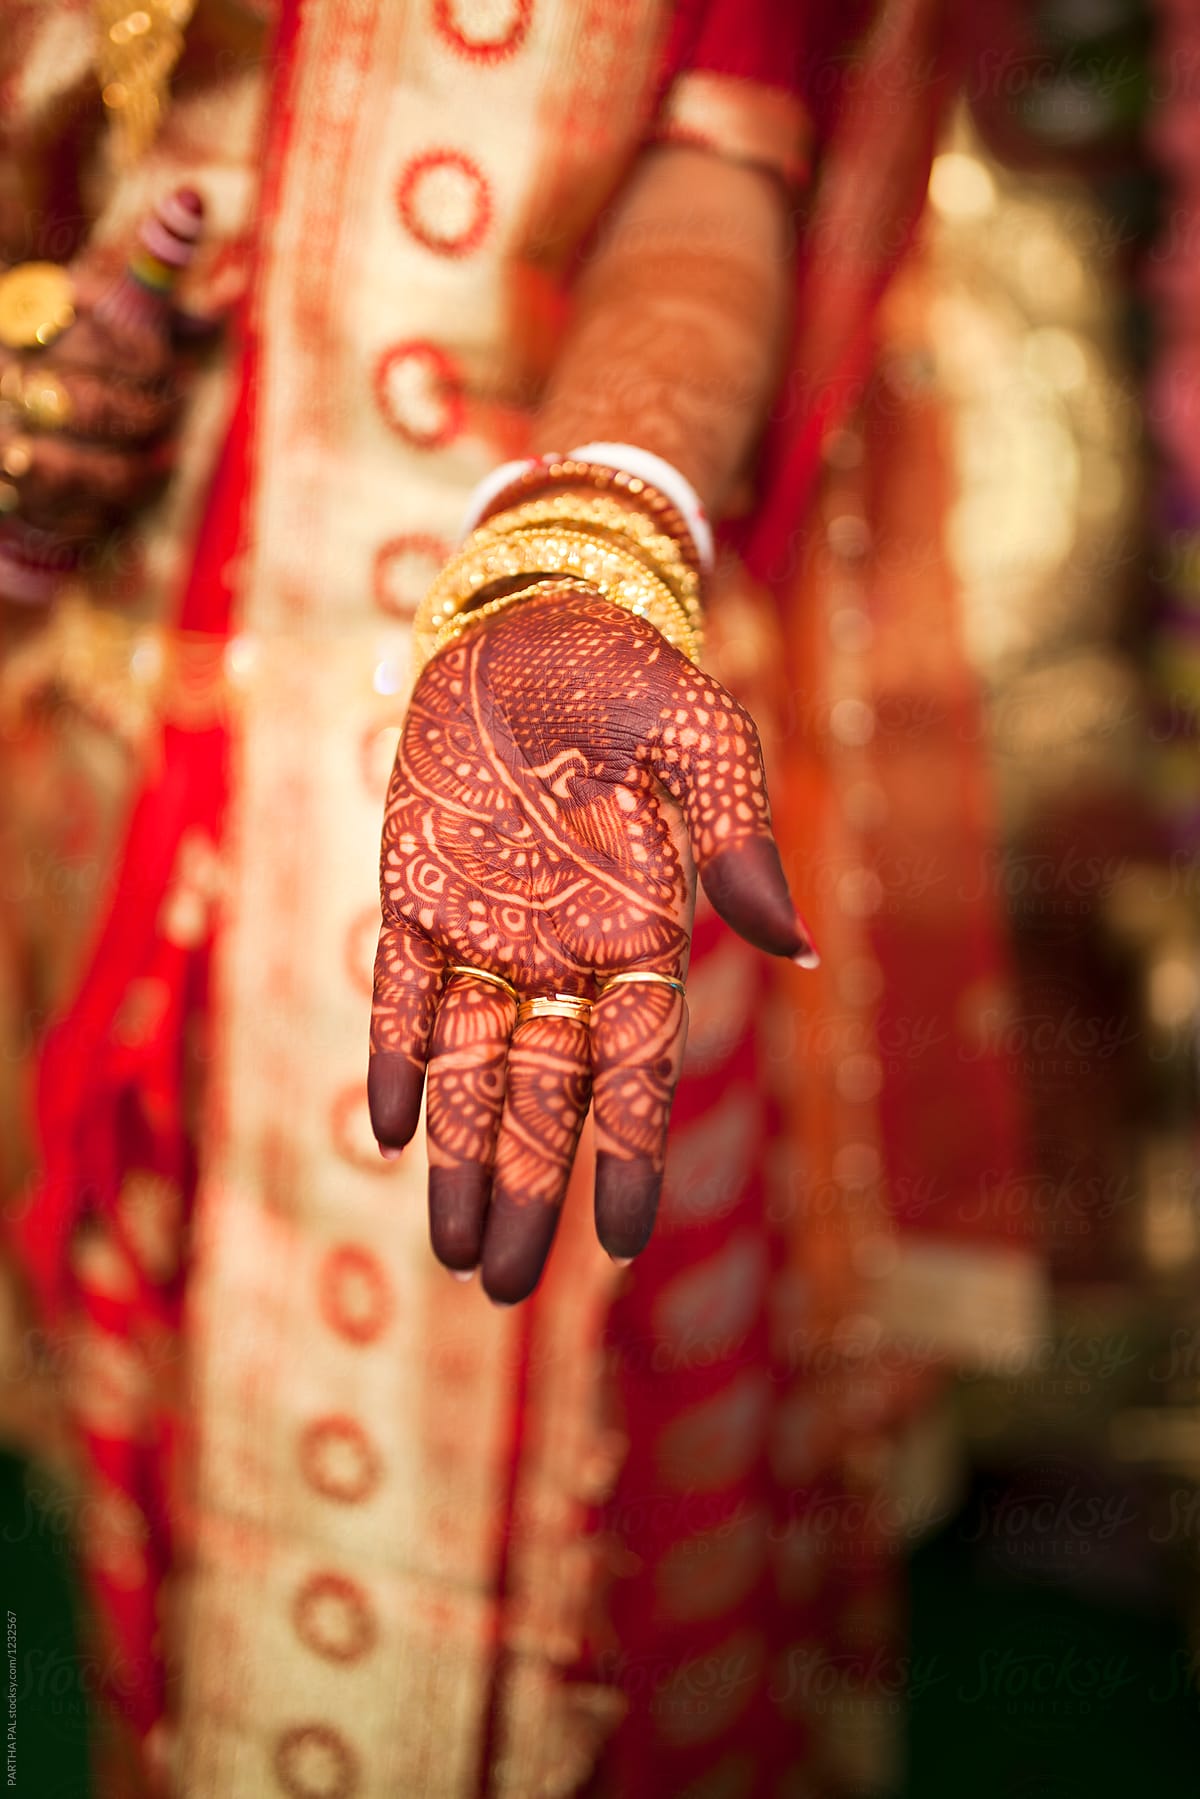 Decorative hand of a Hindu Bride in marriage ceremony